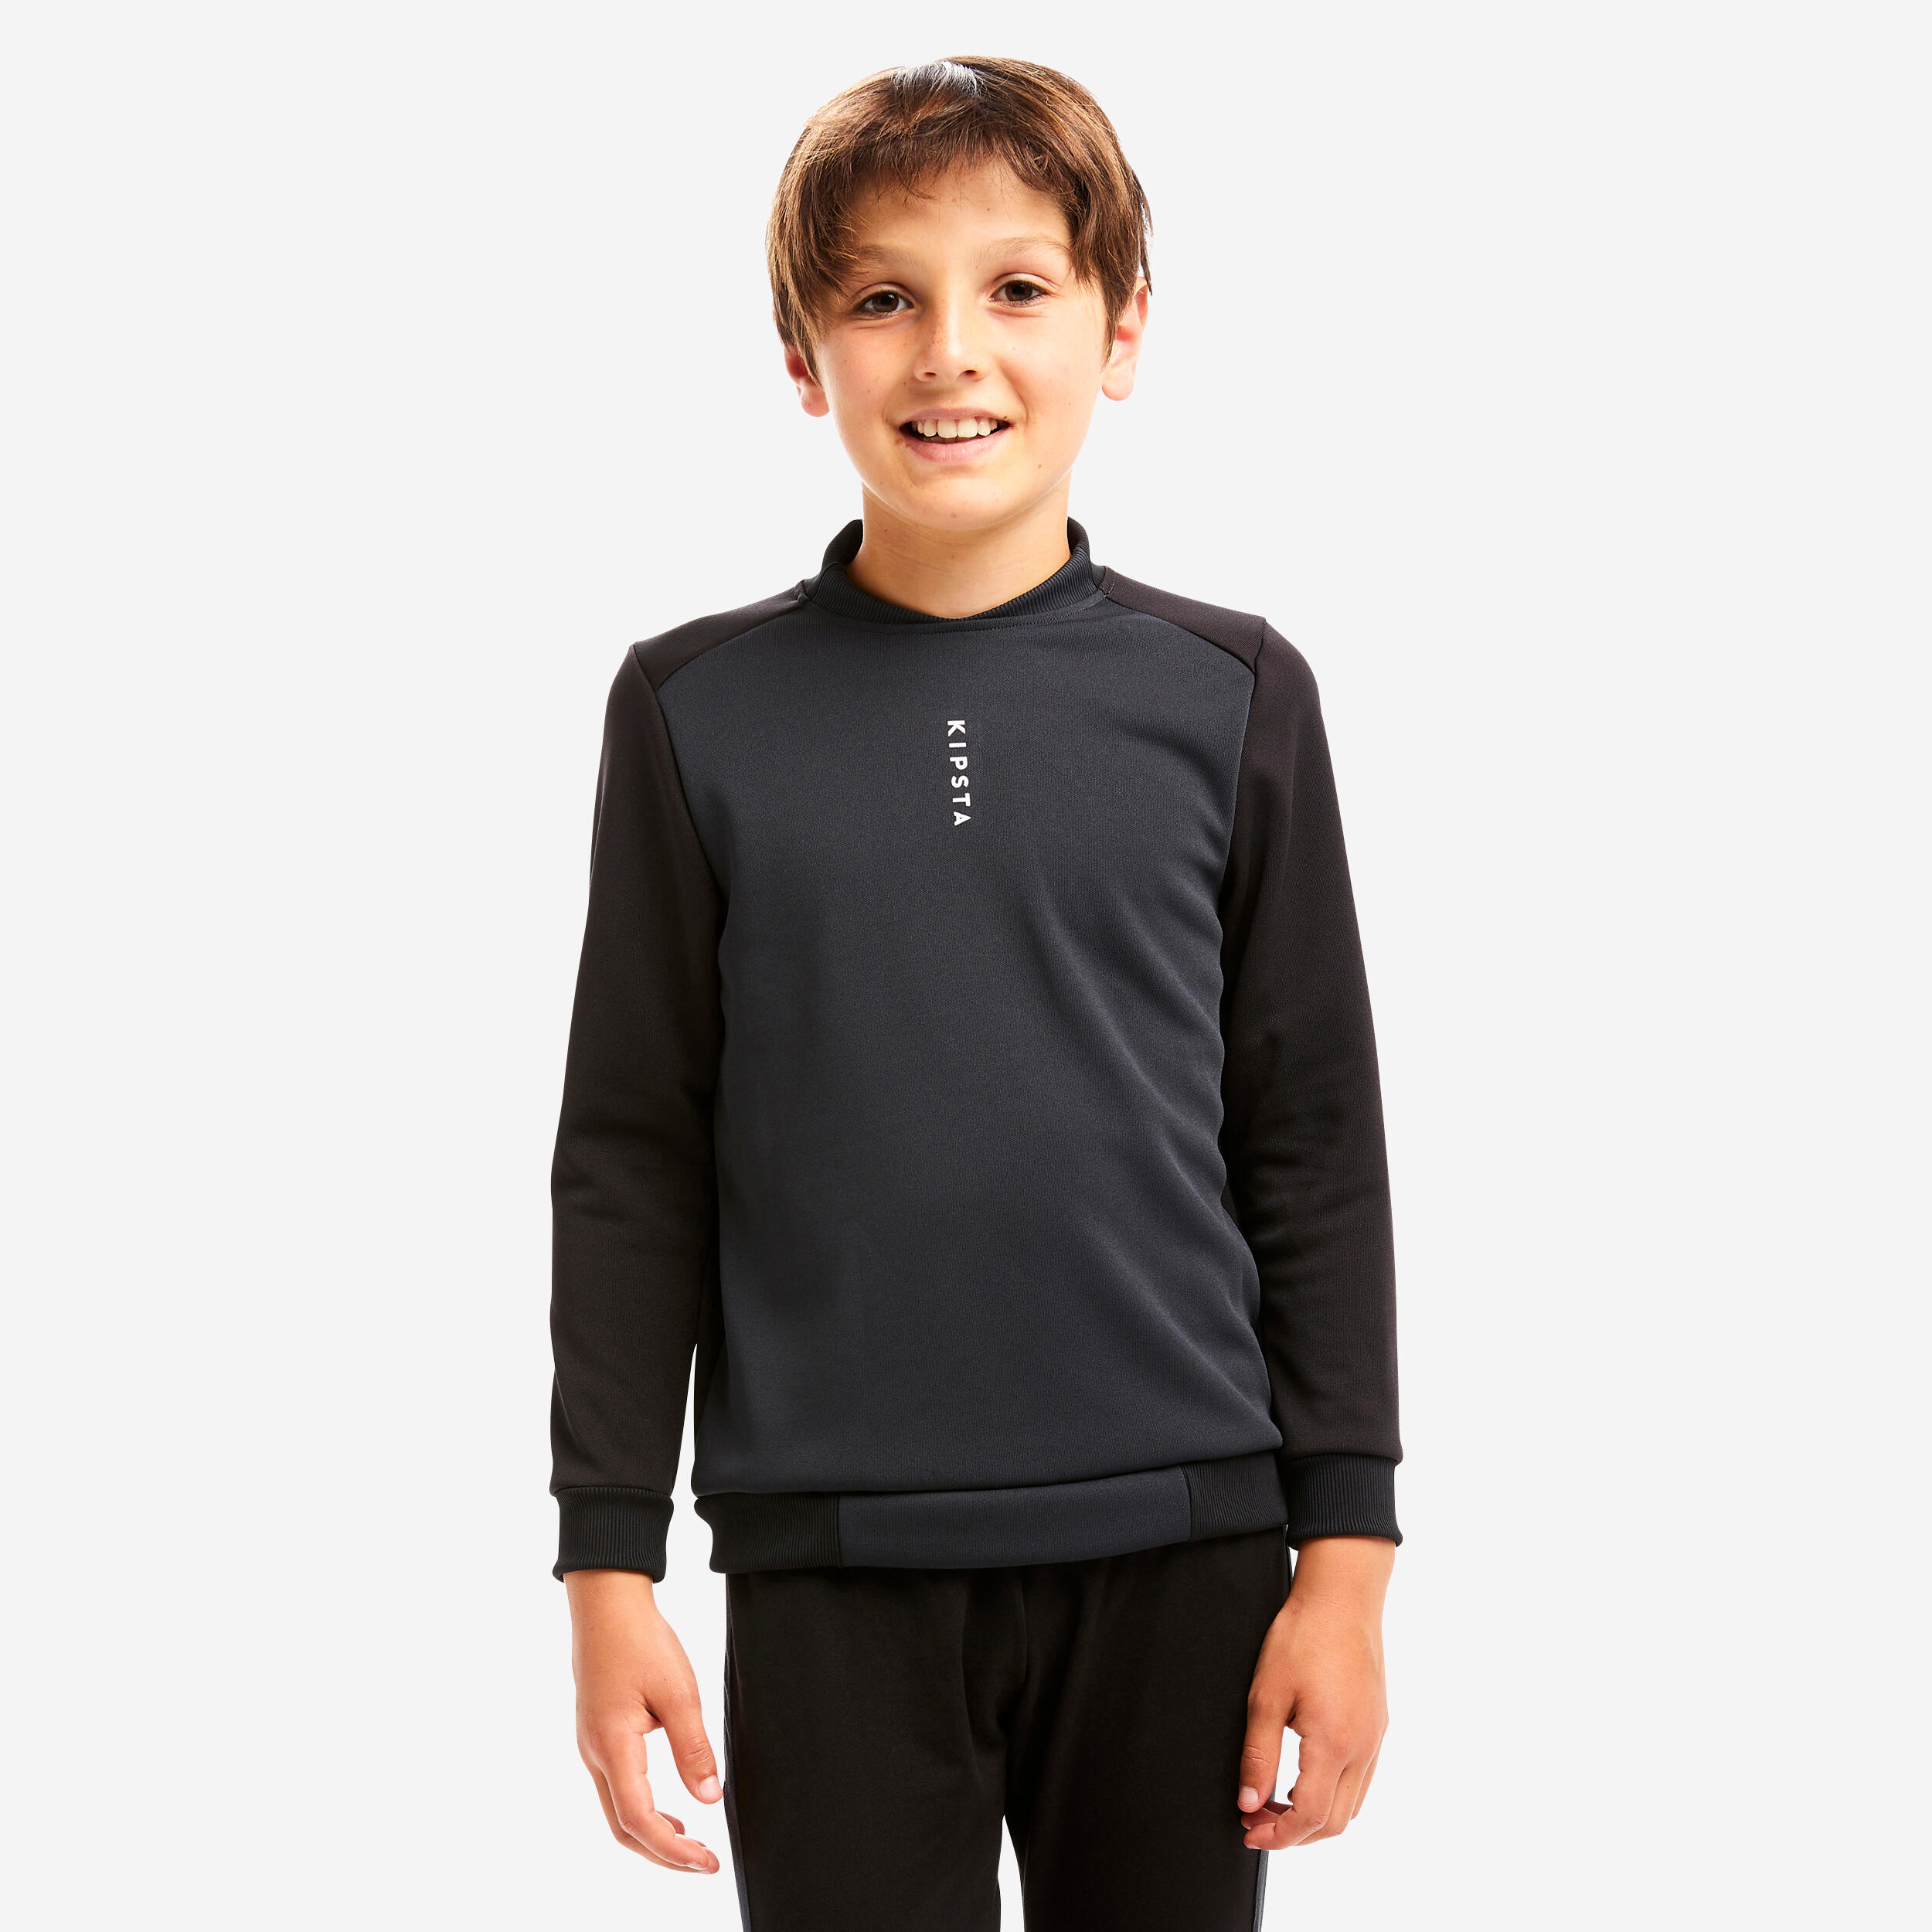 Kinder Fussball Sweatshirt - Essentiel Club schwarz/grau